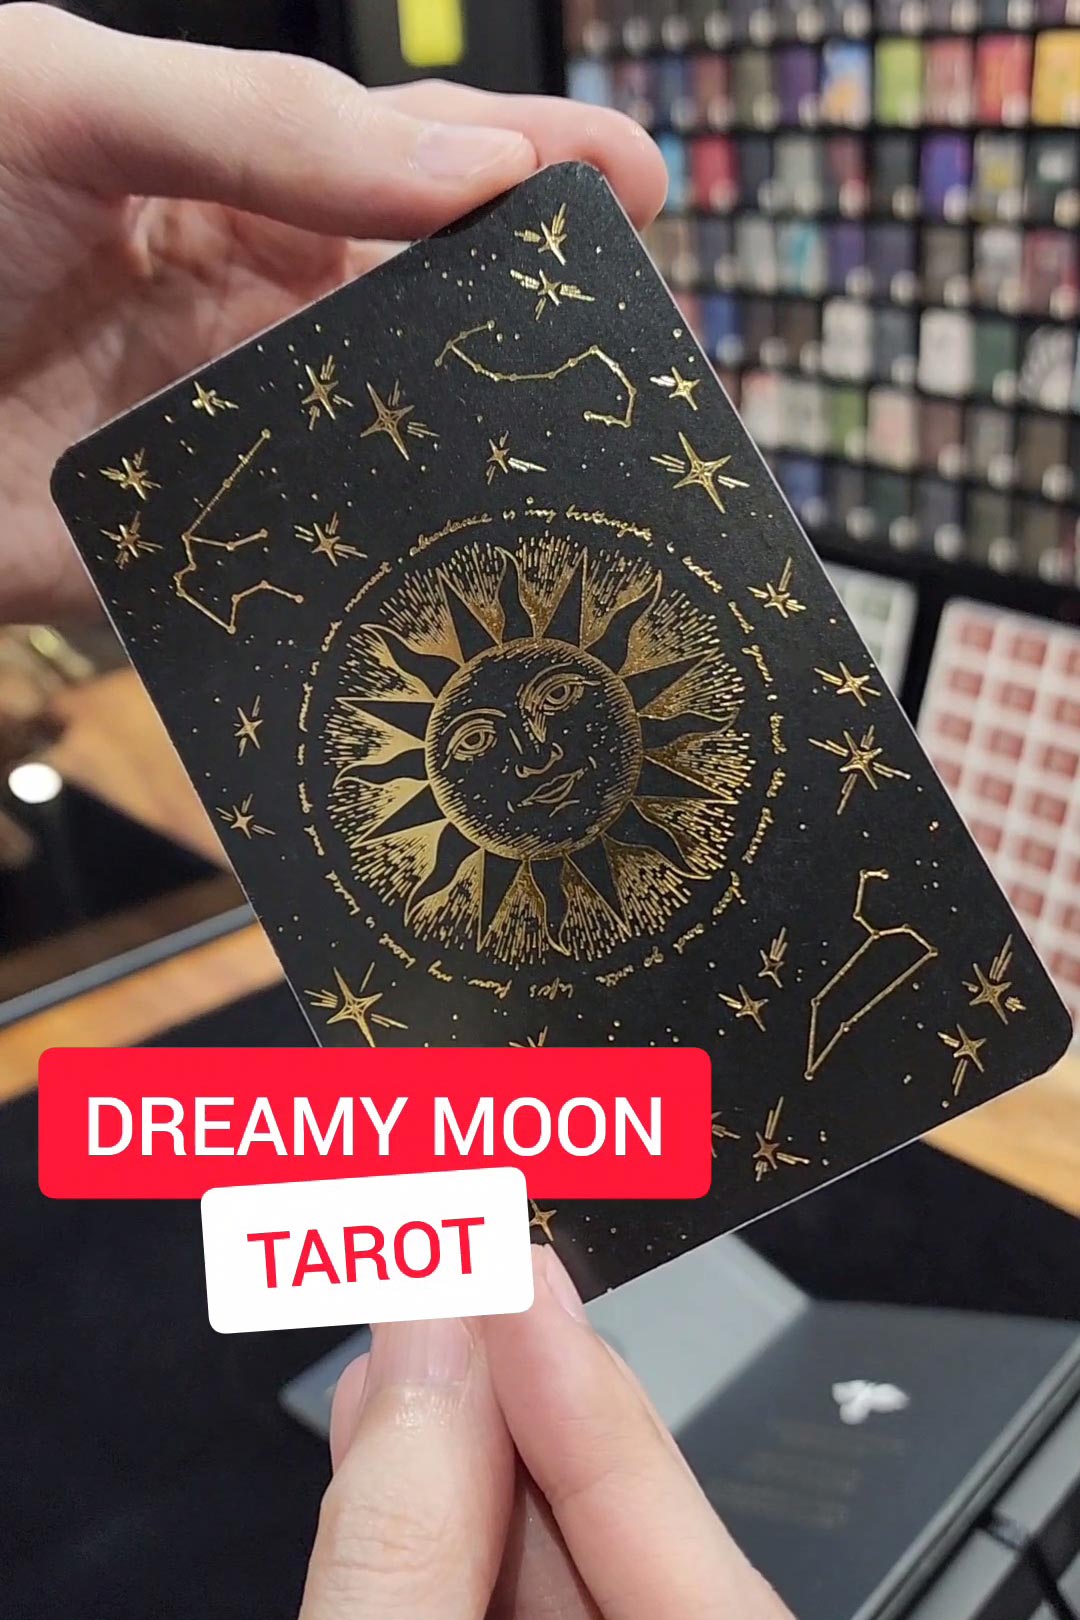 Dreamy Moons Tarot by Annie Tarasova!